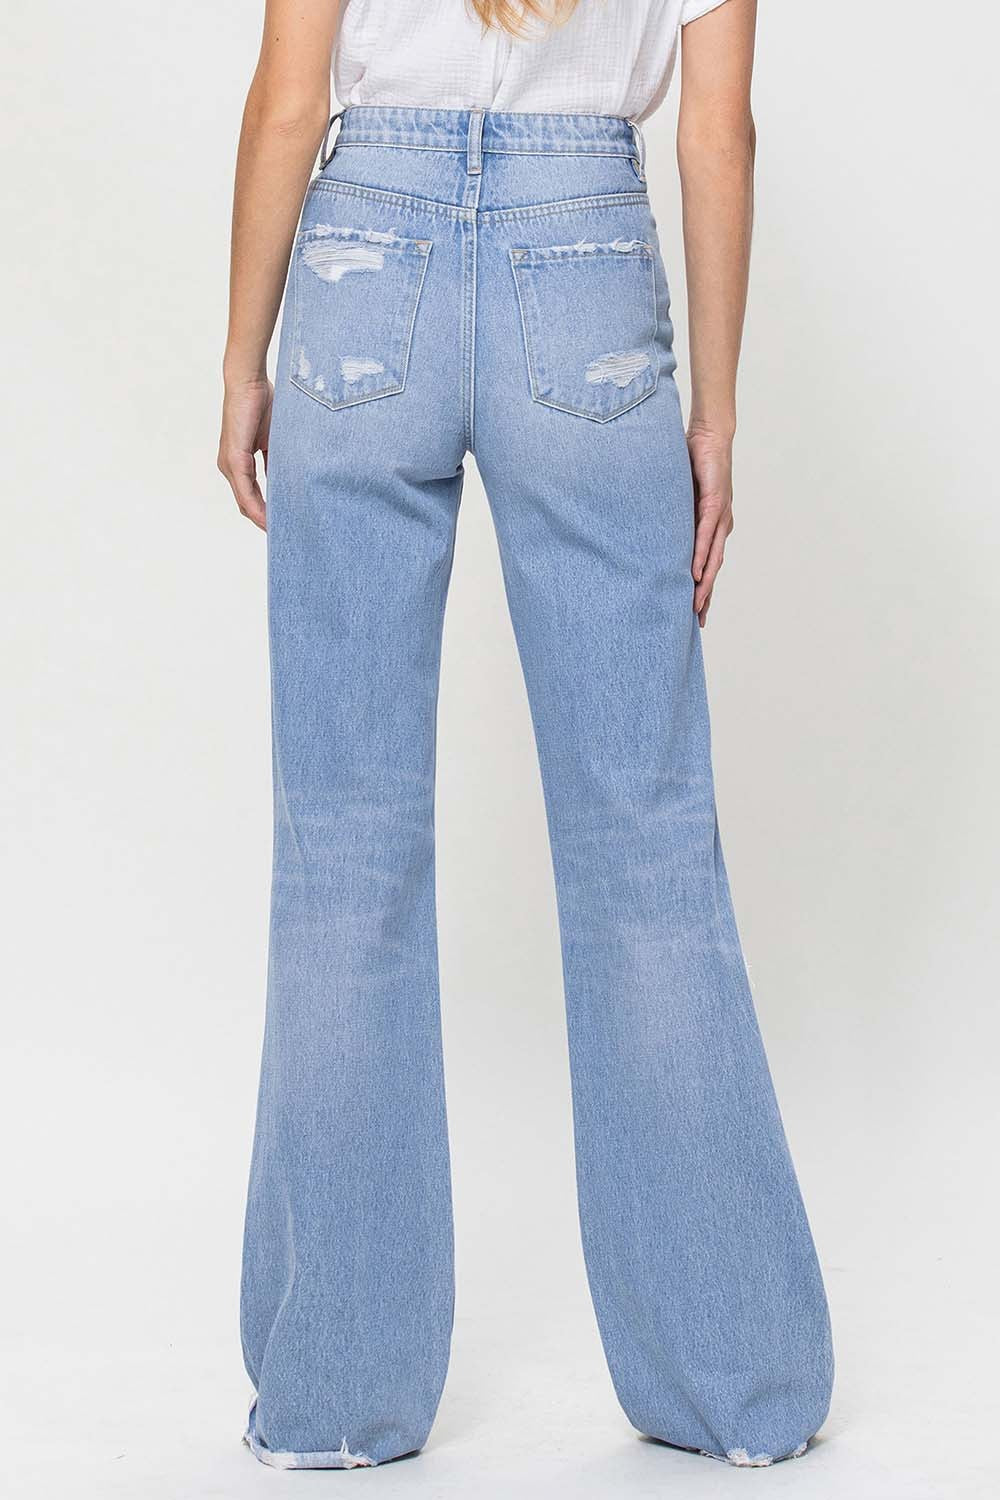 Pre Order Vintage 90s Jeans